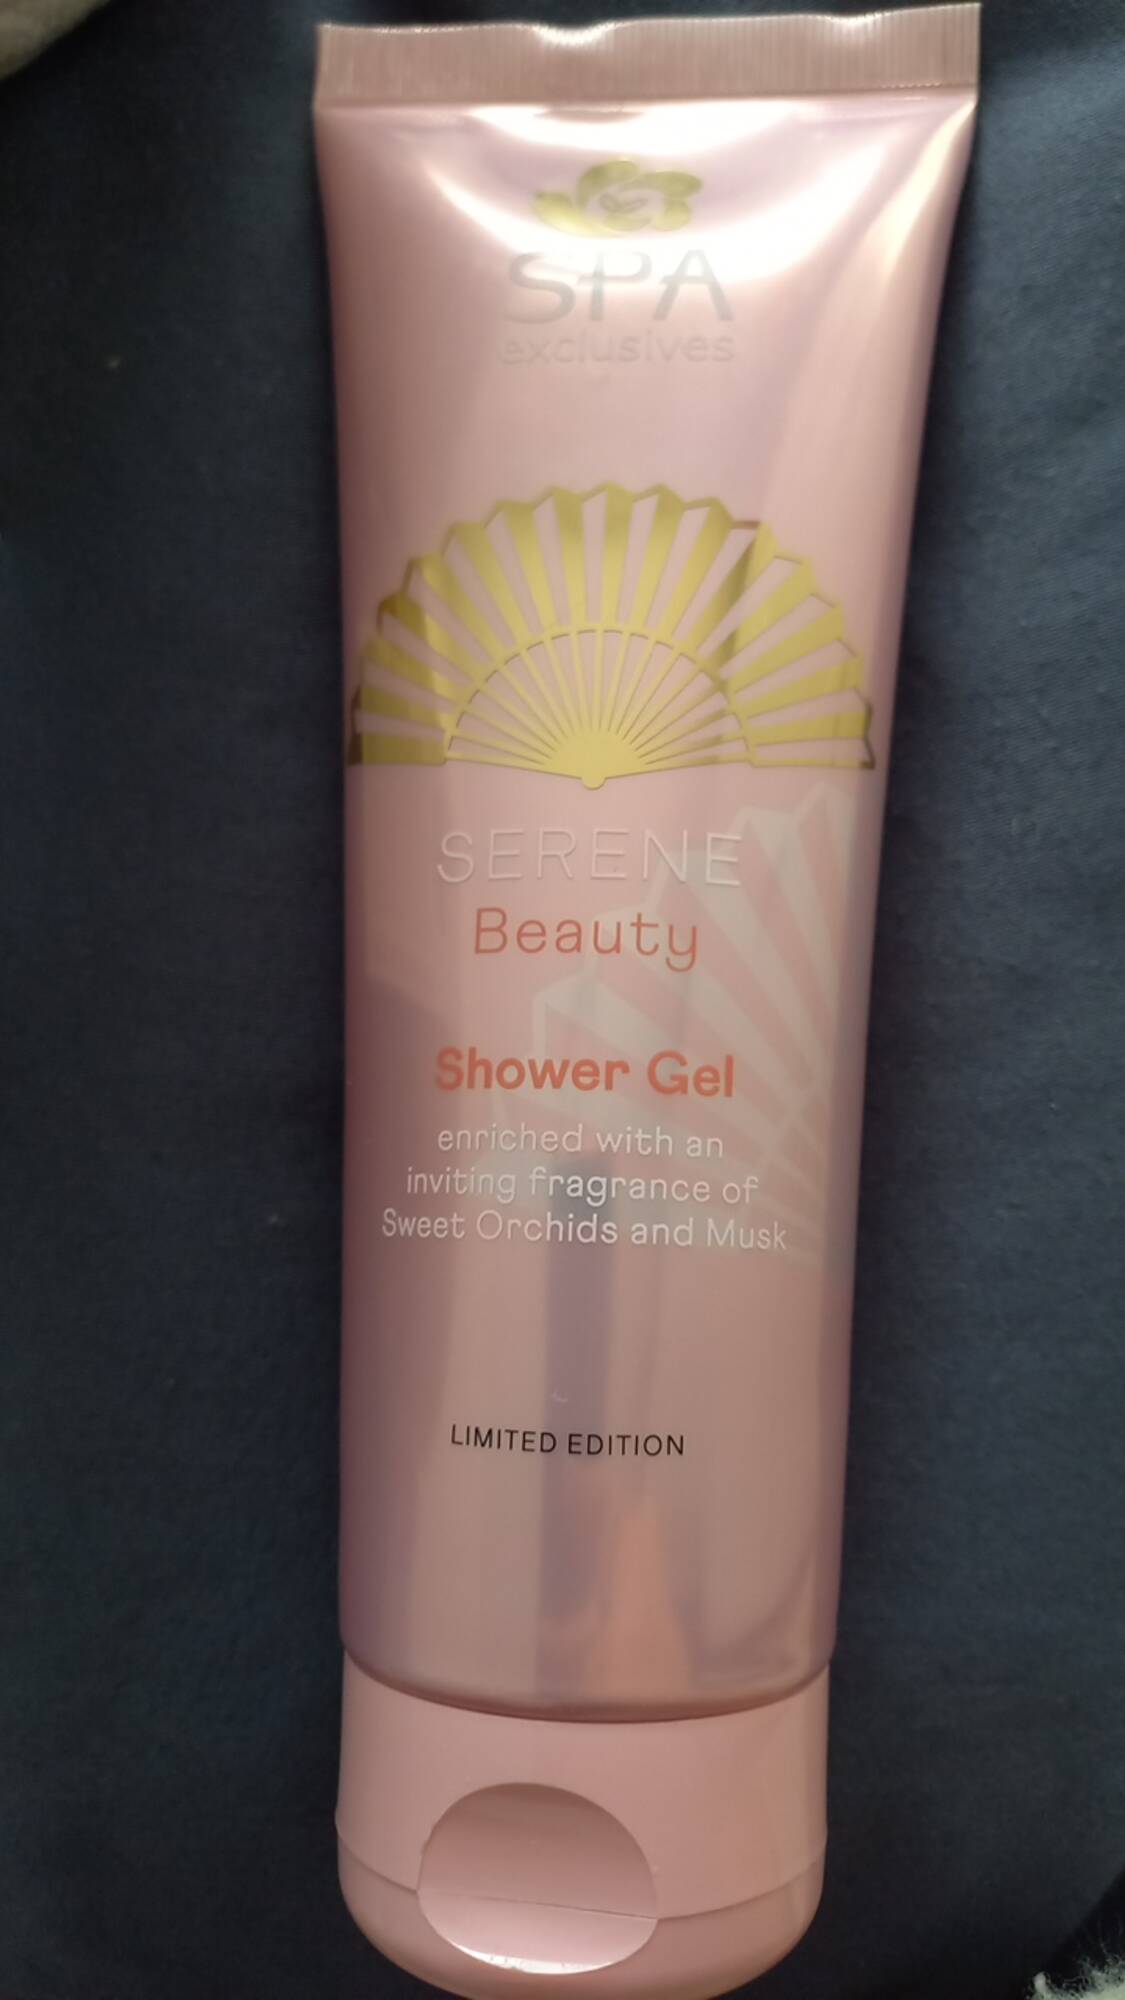 SPA EXCLUSIVES - Serene beauty - Shower gel